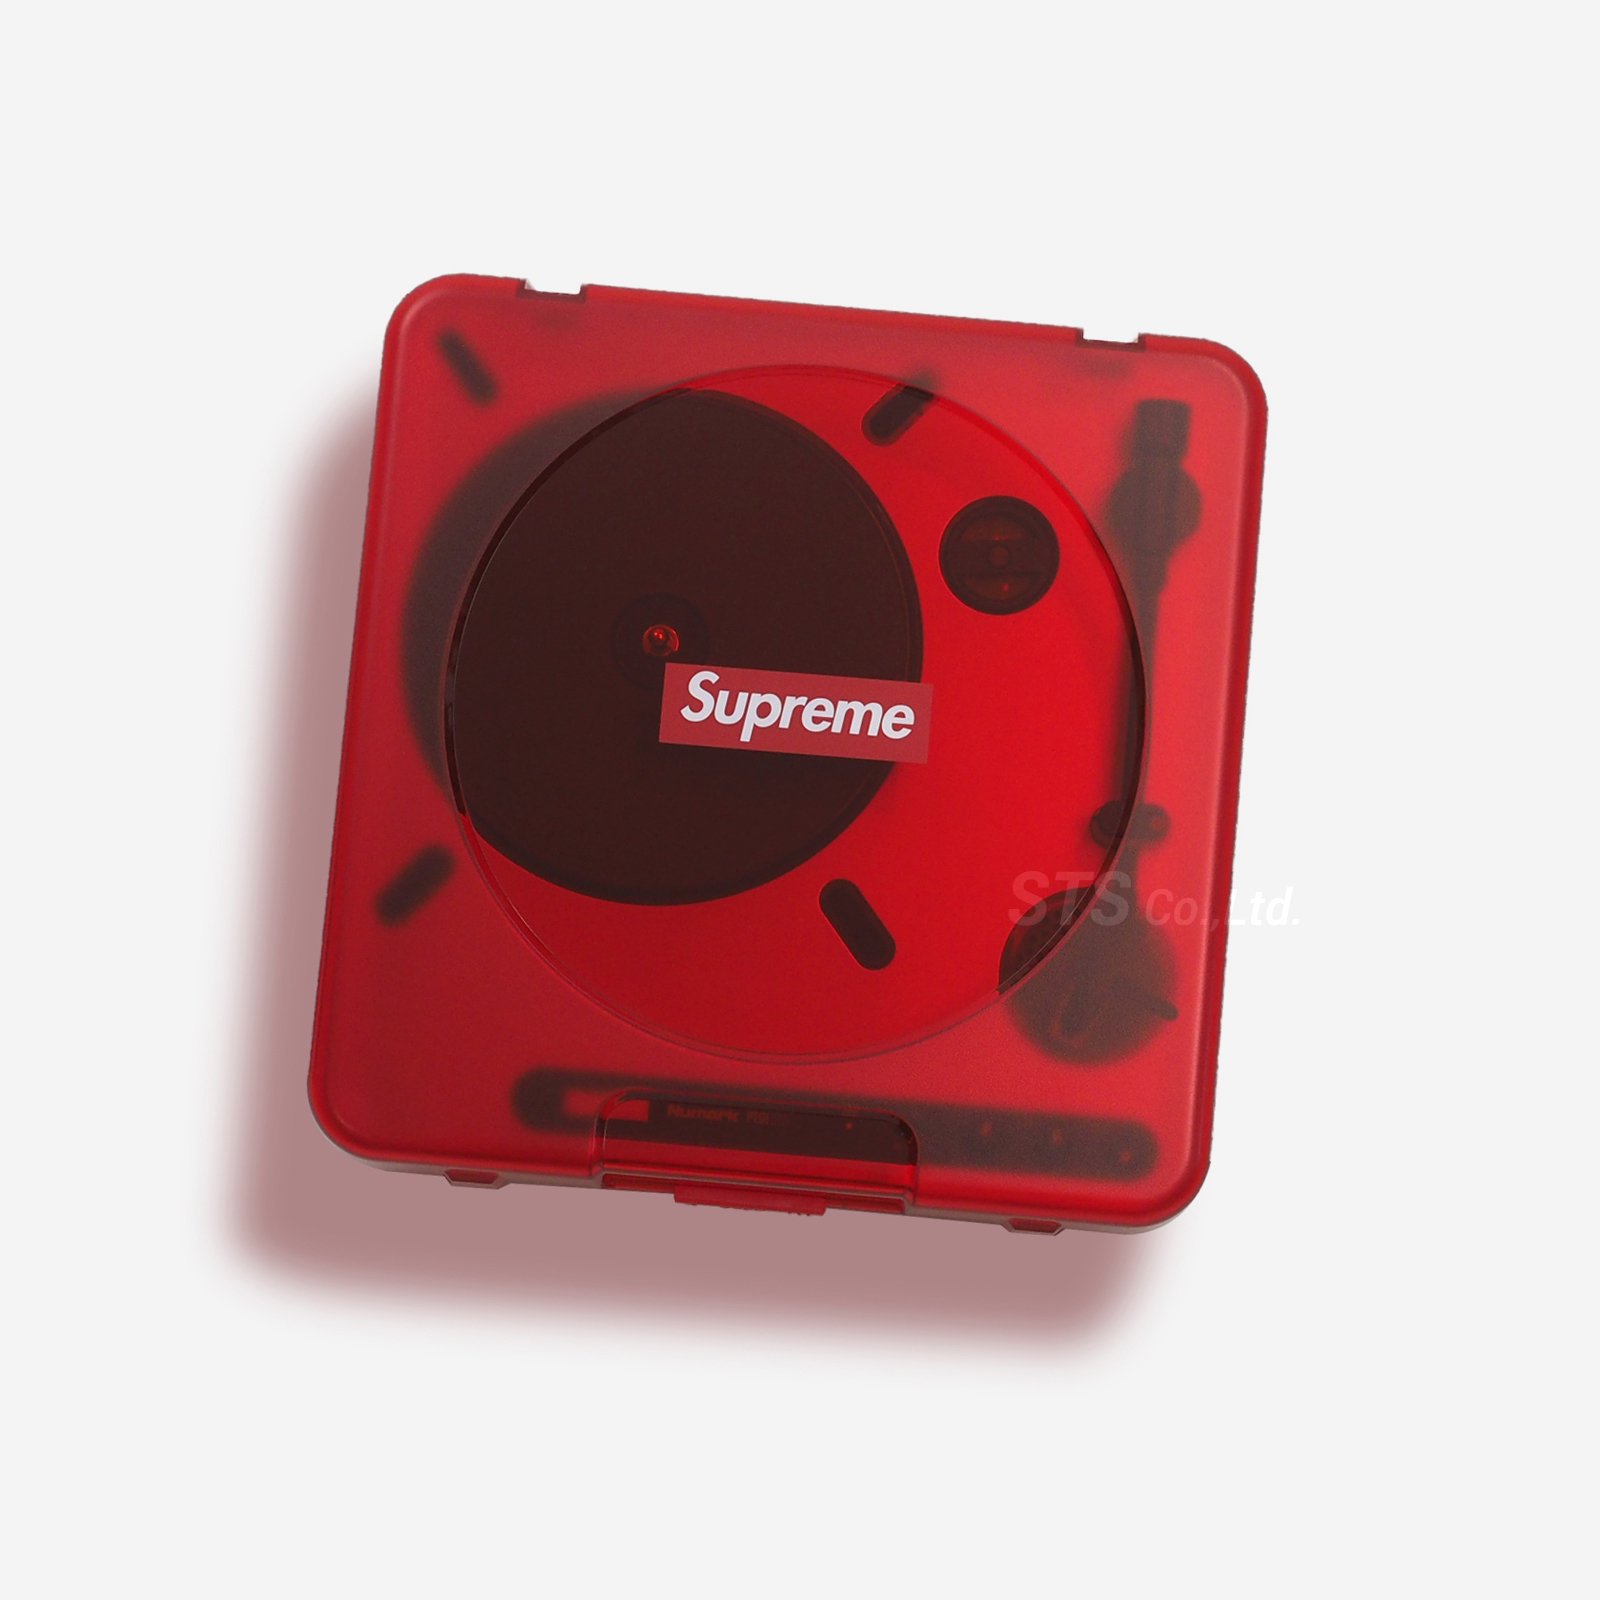 DJ機器Supreme Numark Portable Turntable - midoc.com.br